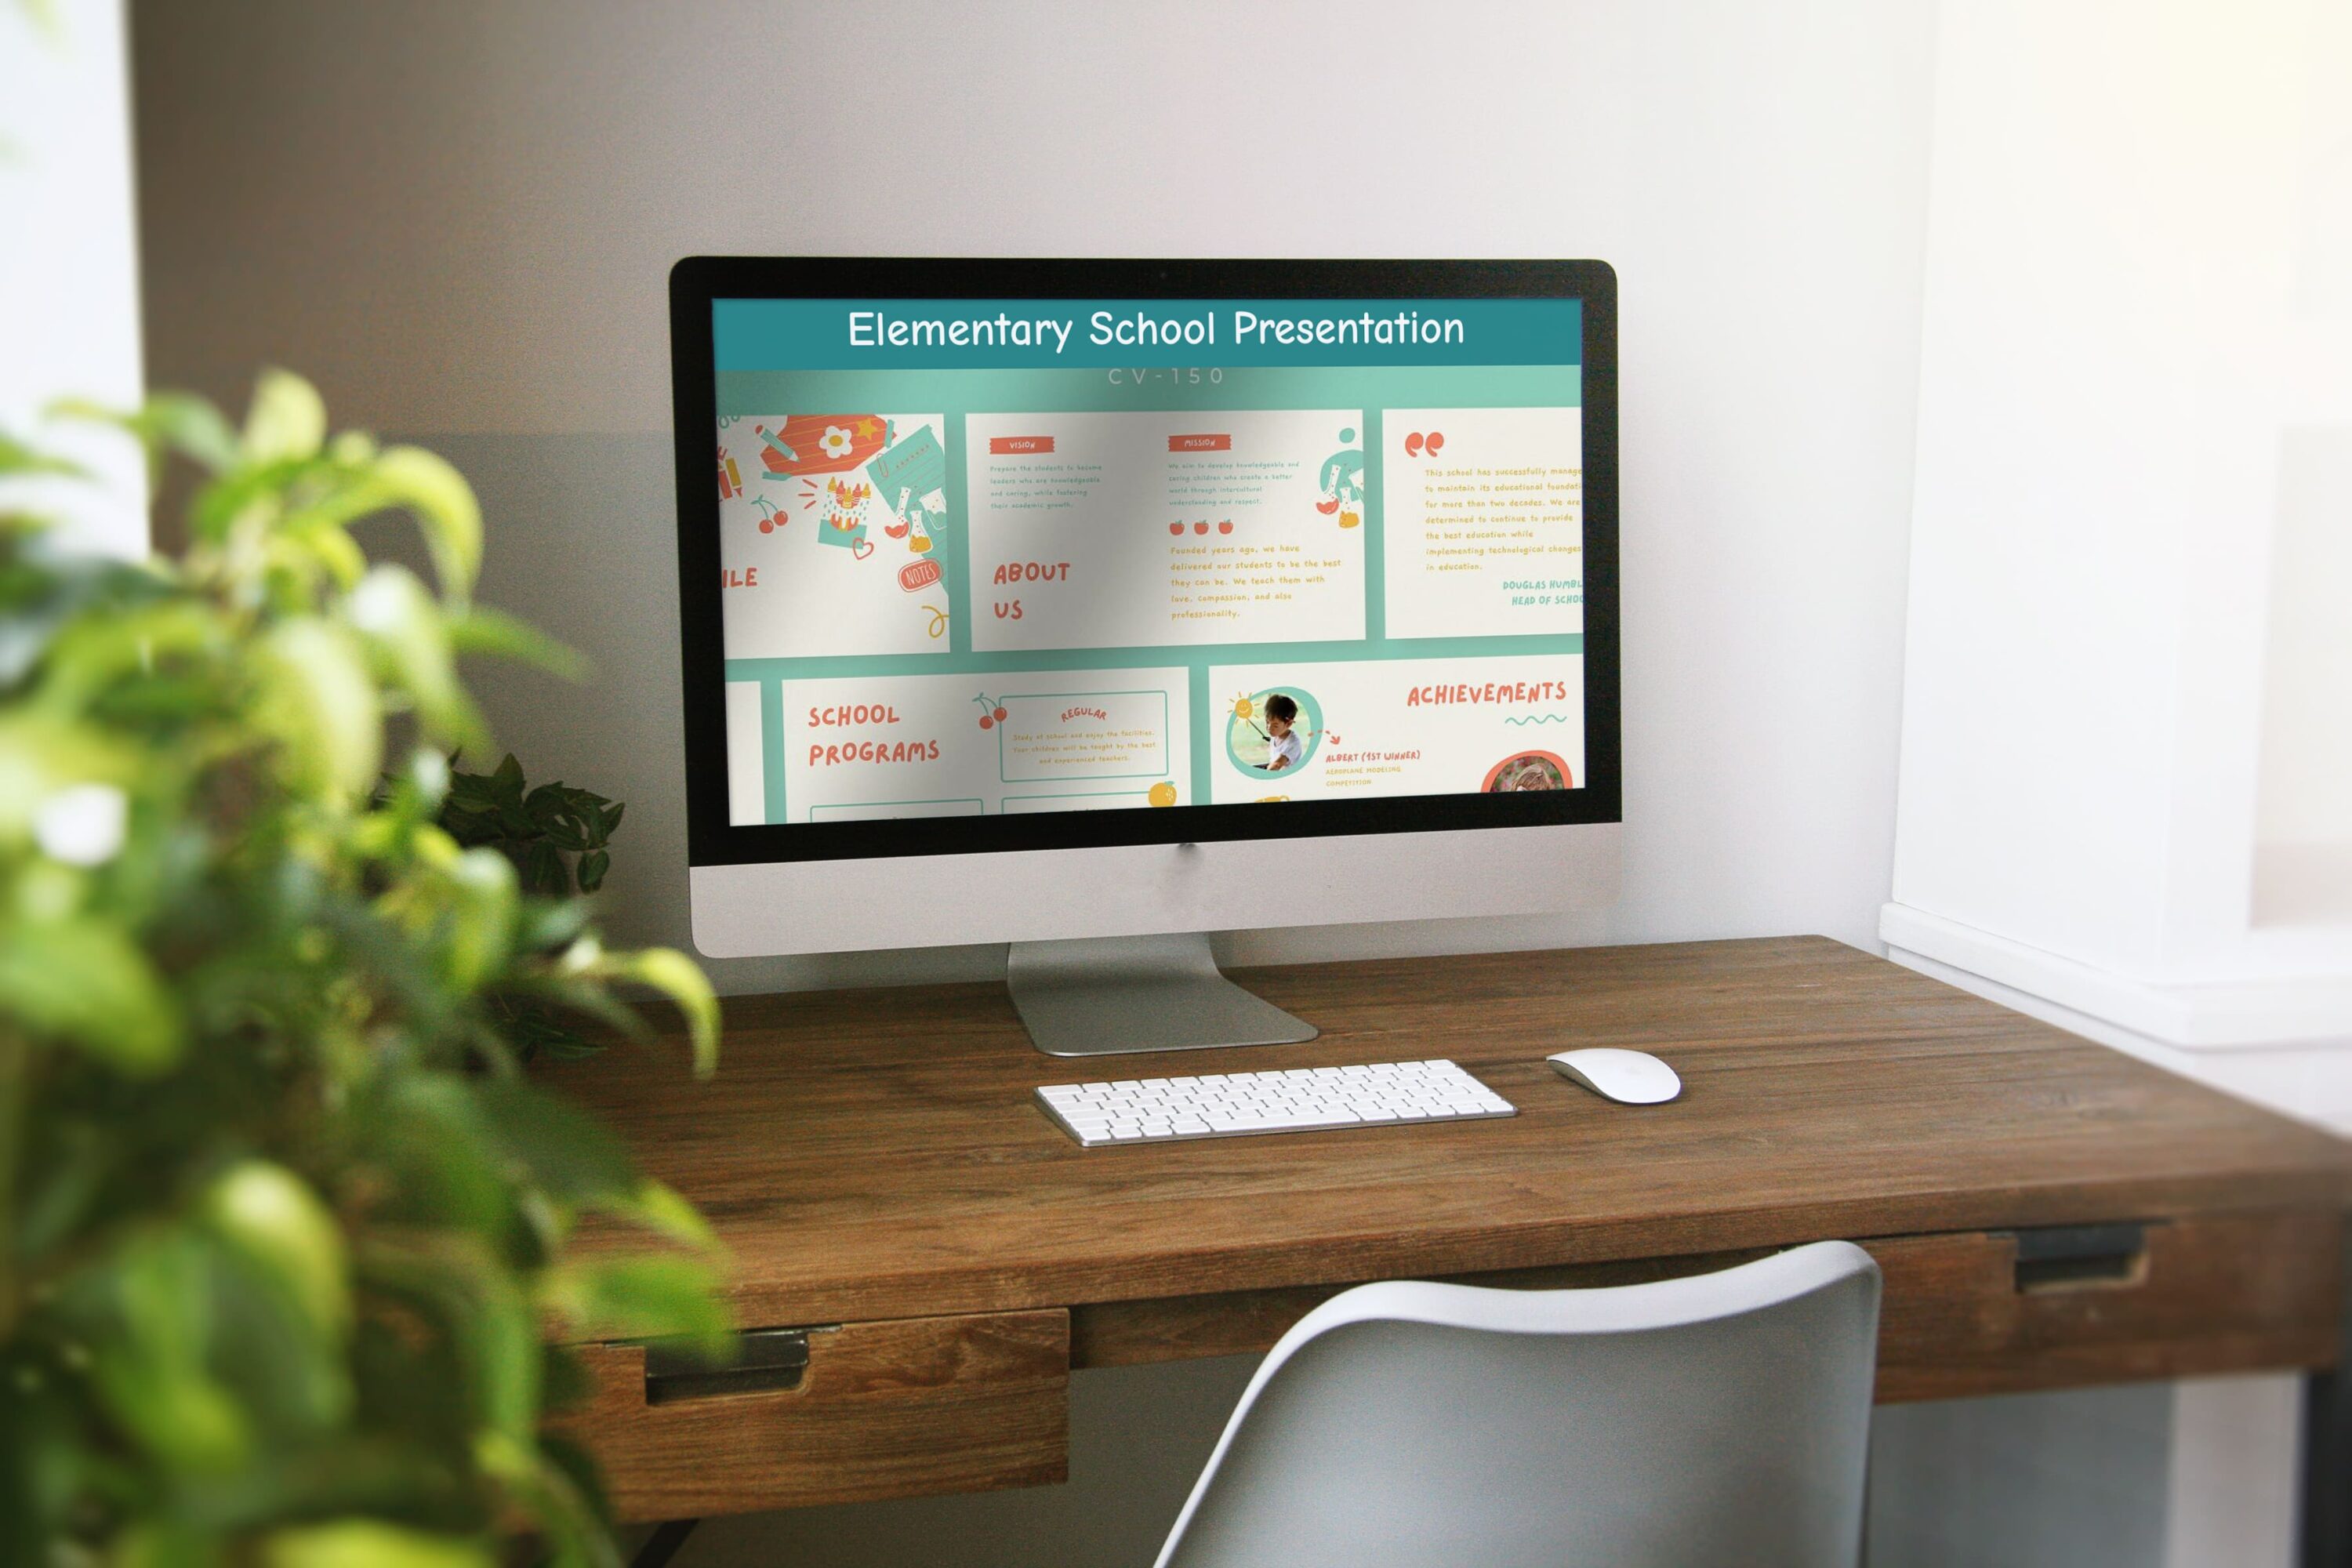 Elementary School Presentation - desktop.